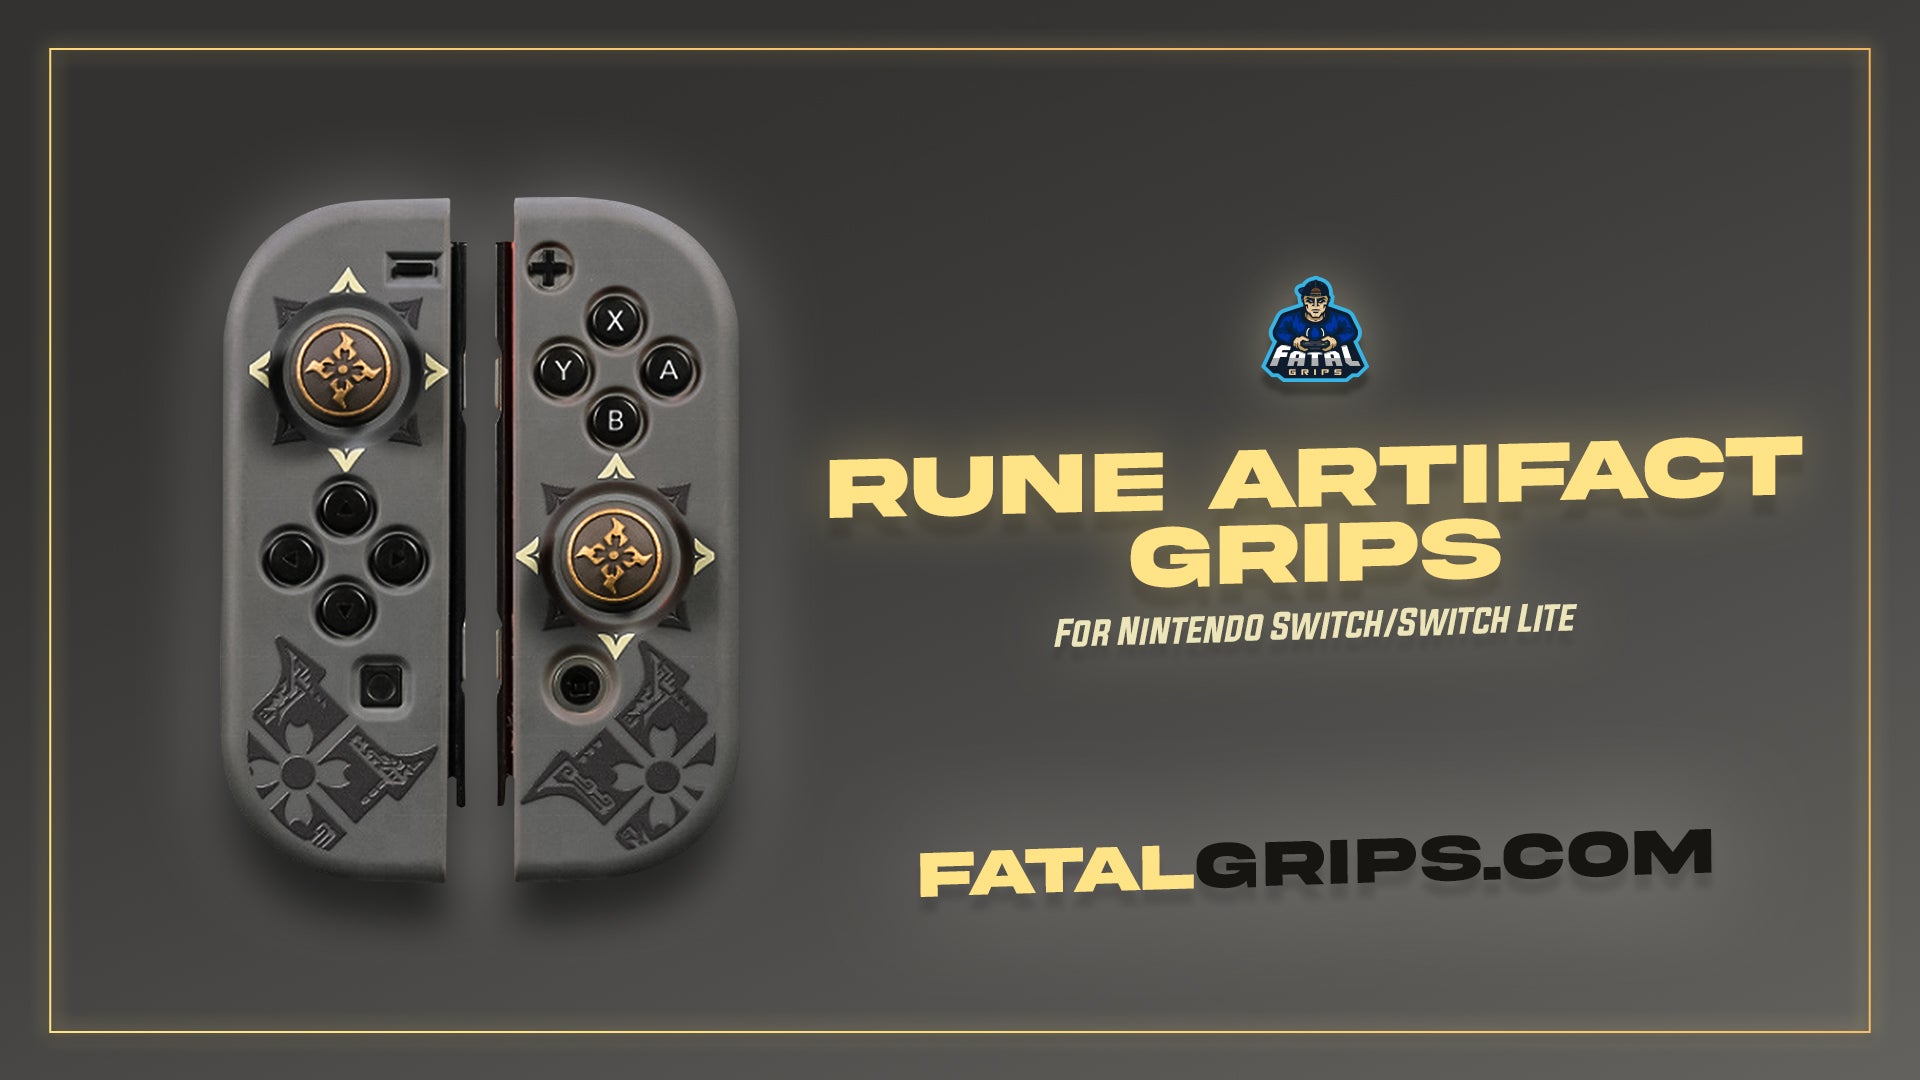 Rune Artifact Grips